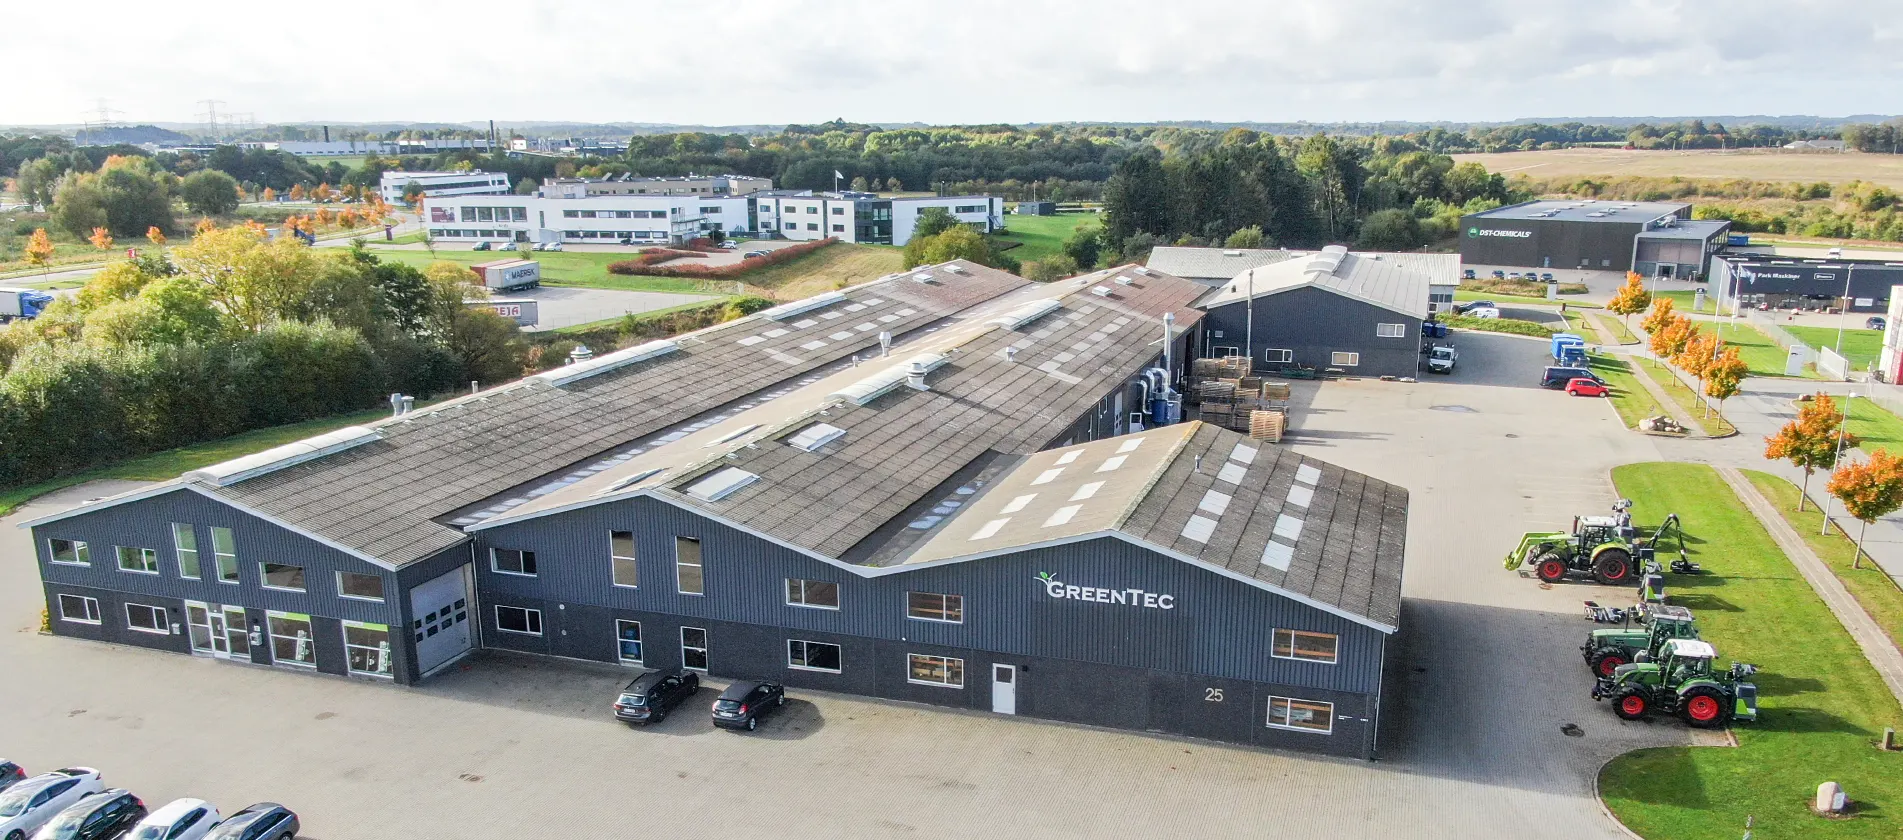 Drone image of GreenTec facilities in Kolding, Denmark